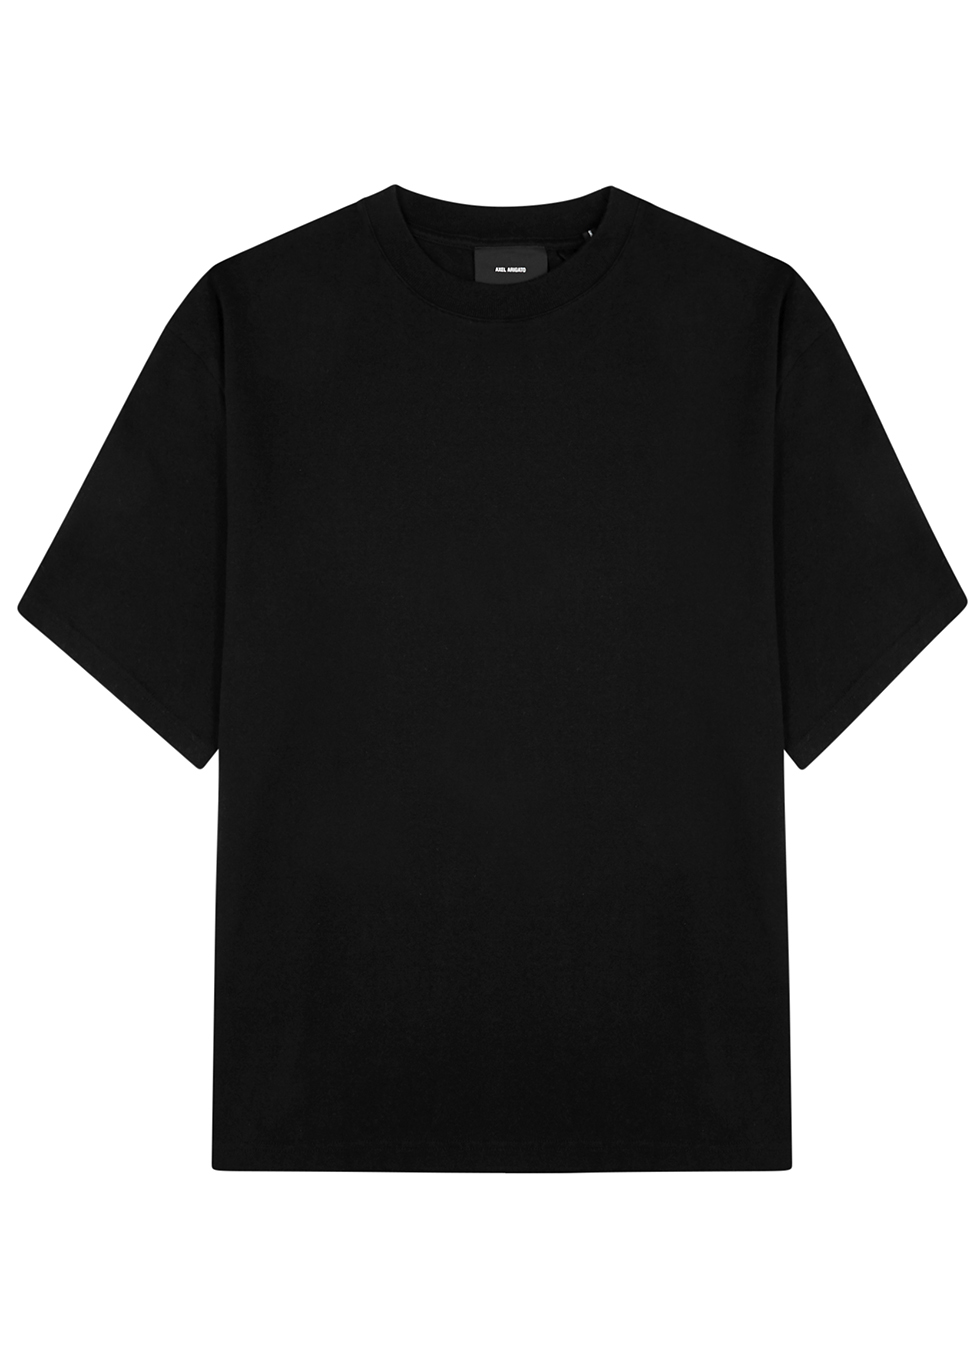 Axel Arigato Lock Stitch black cotton T-shirt